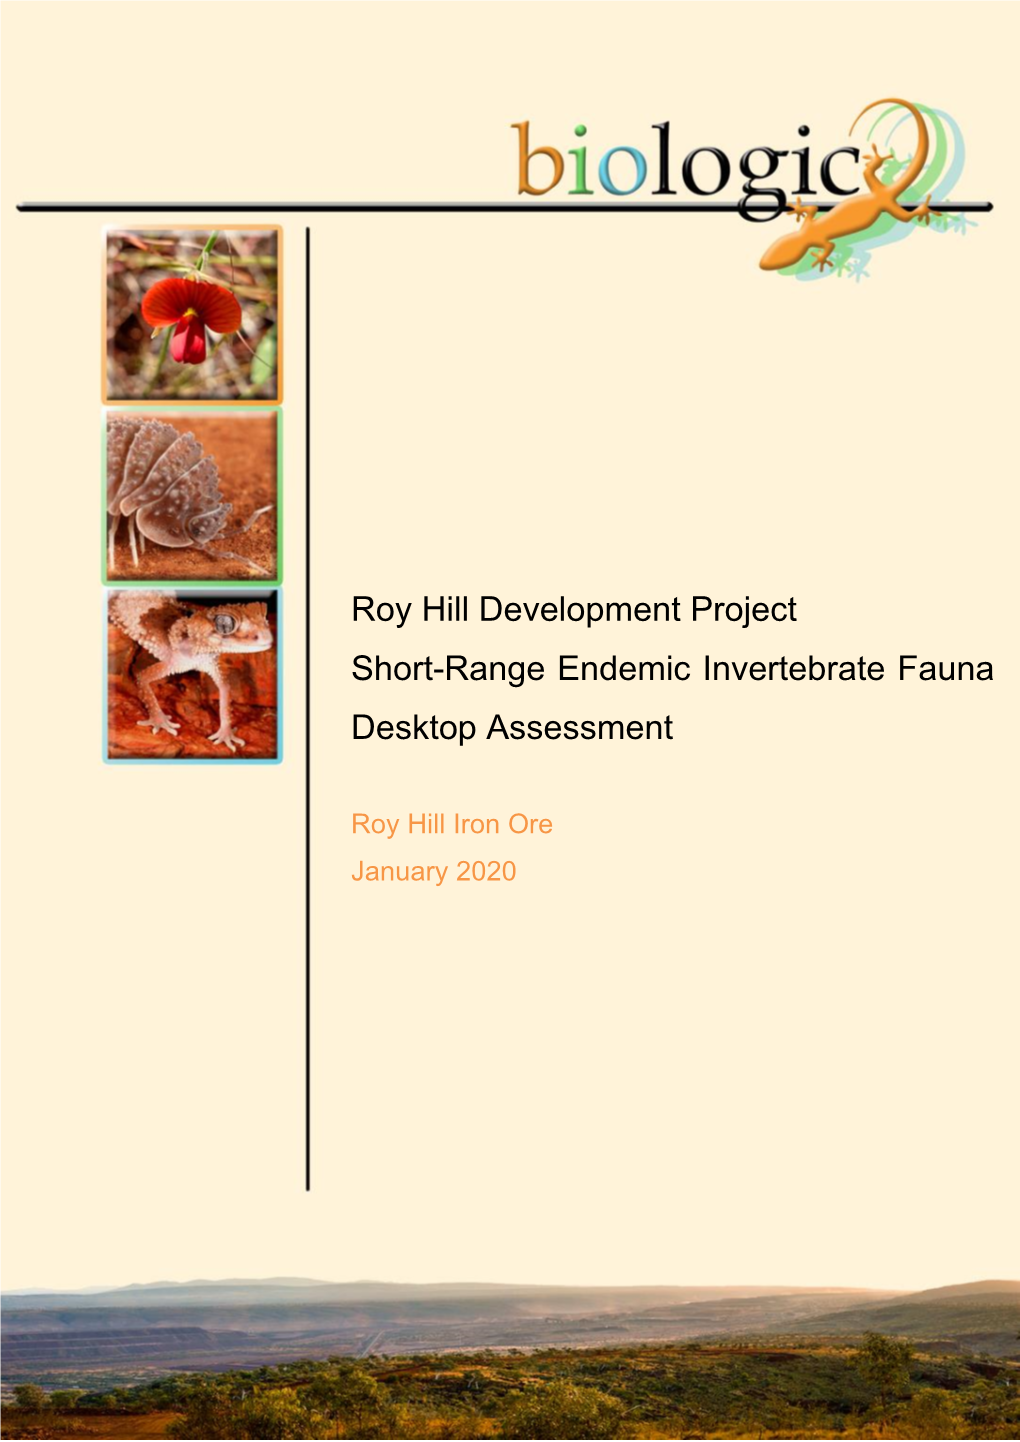 Roy Hill Development Project Short-Range Endemic Invertebrate Fauna Desktop Assessment